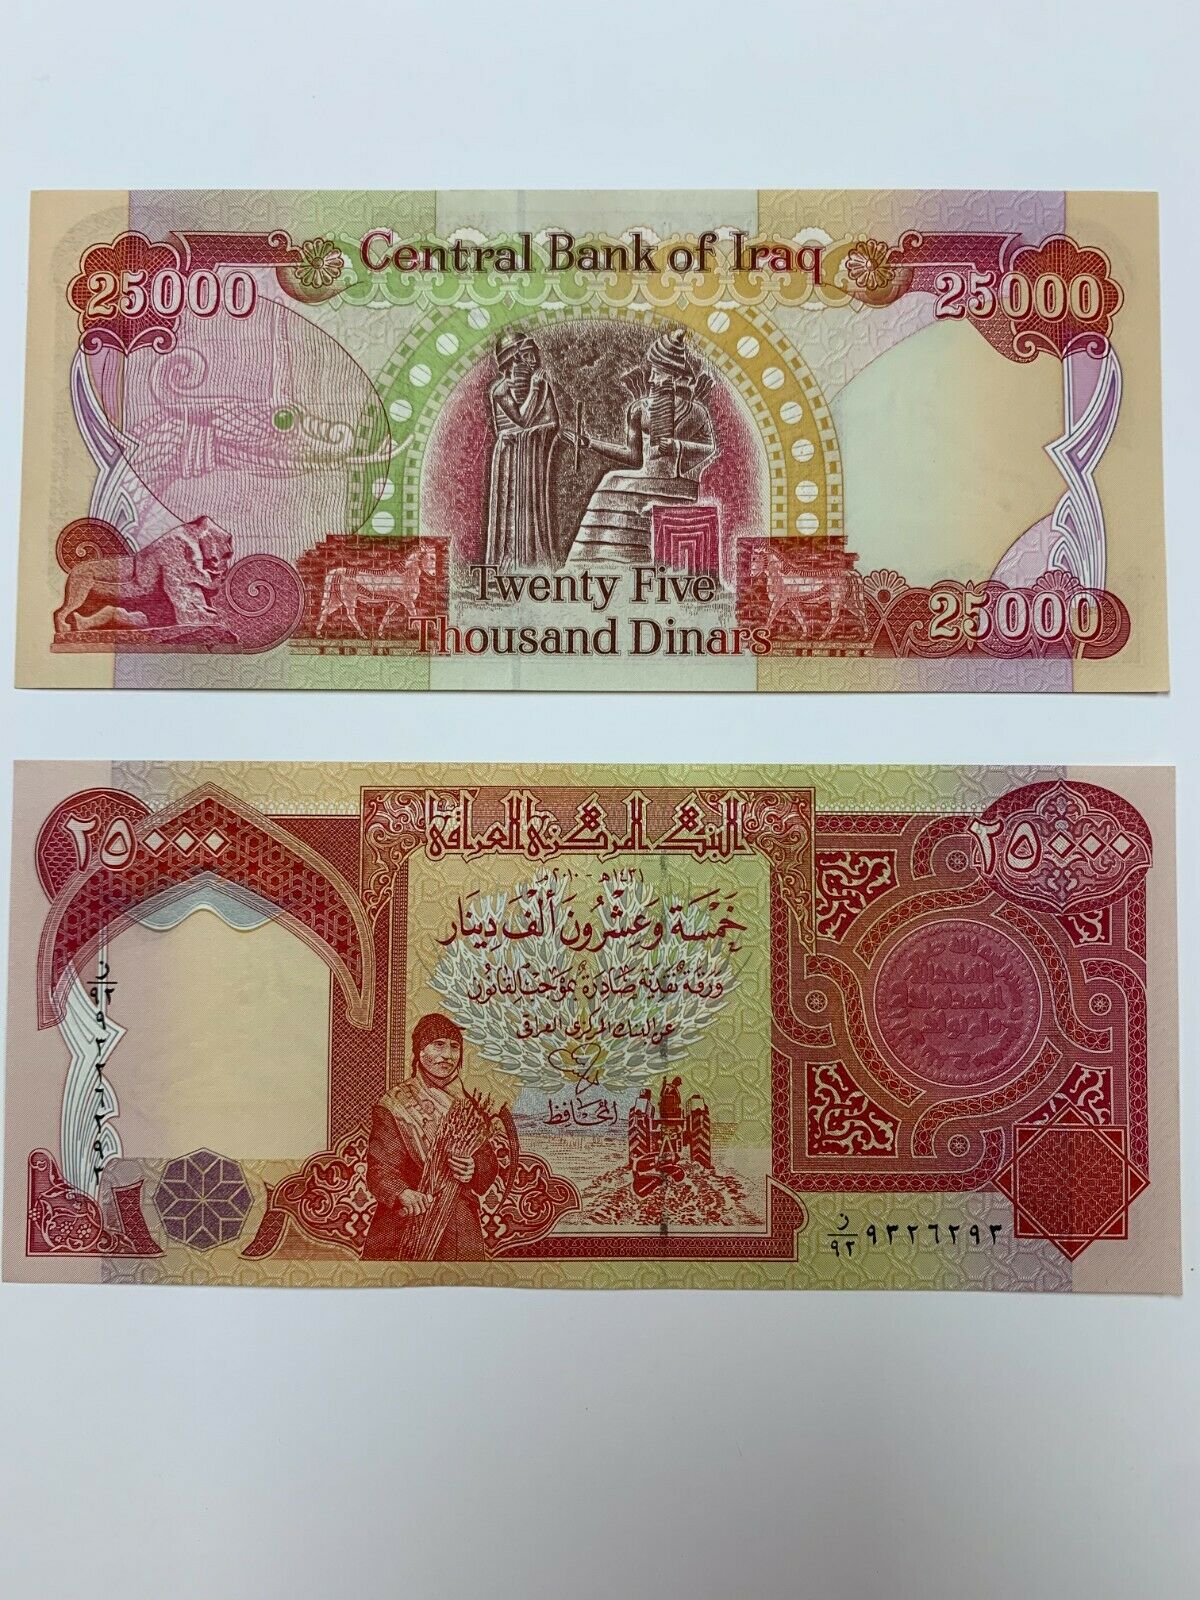 Iraqi Money (iqd) - 25000 Iraqi Dinar - 25,000 Unc Banknotes Active & Authentic